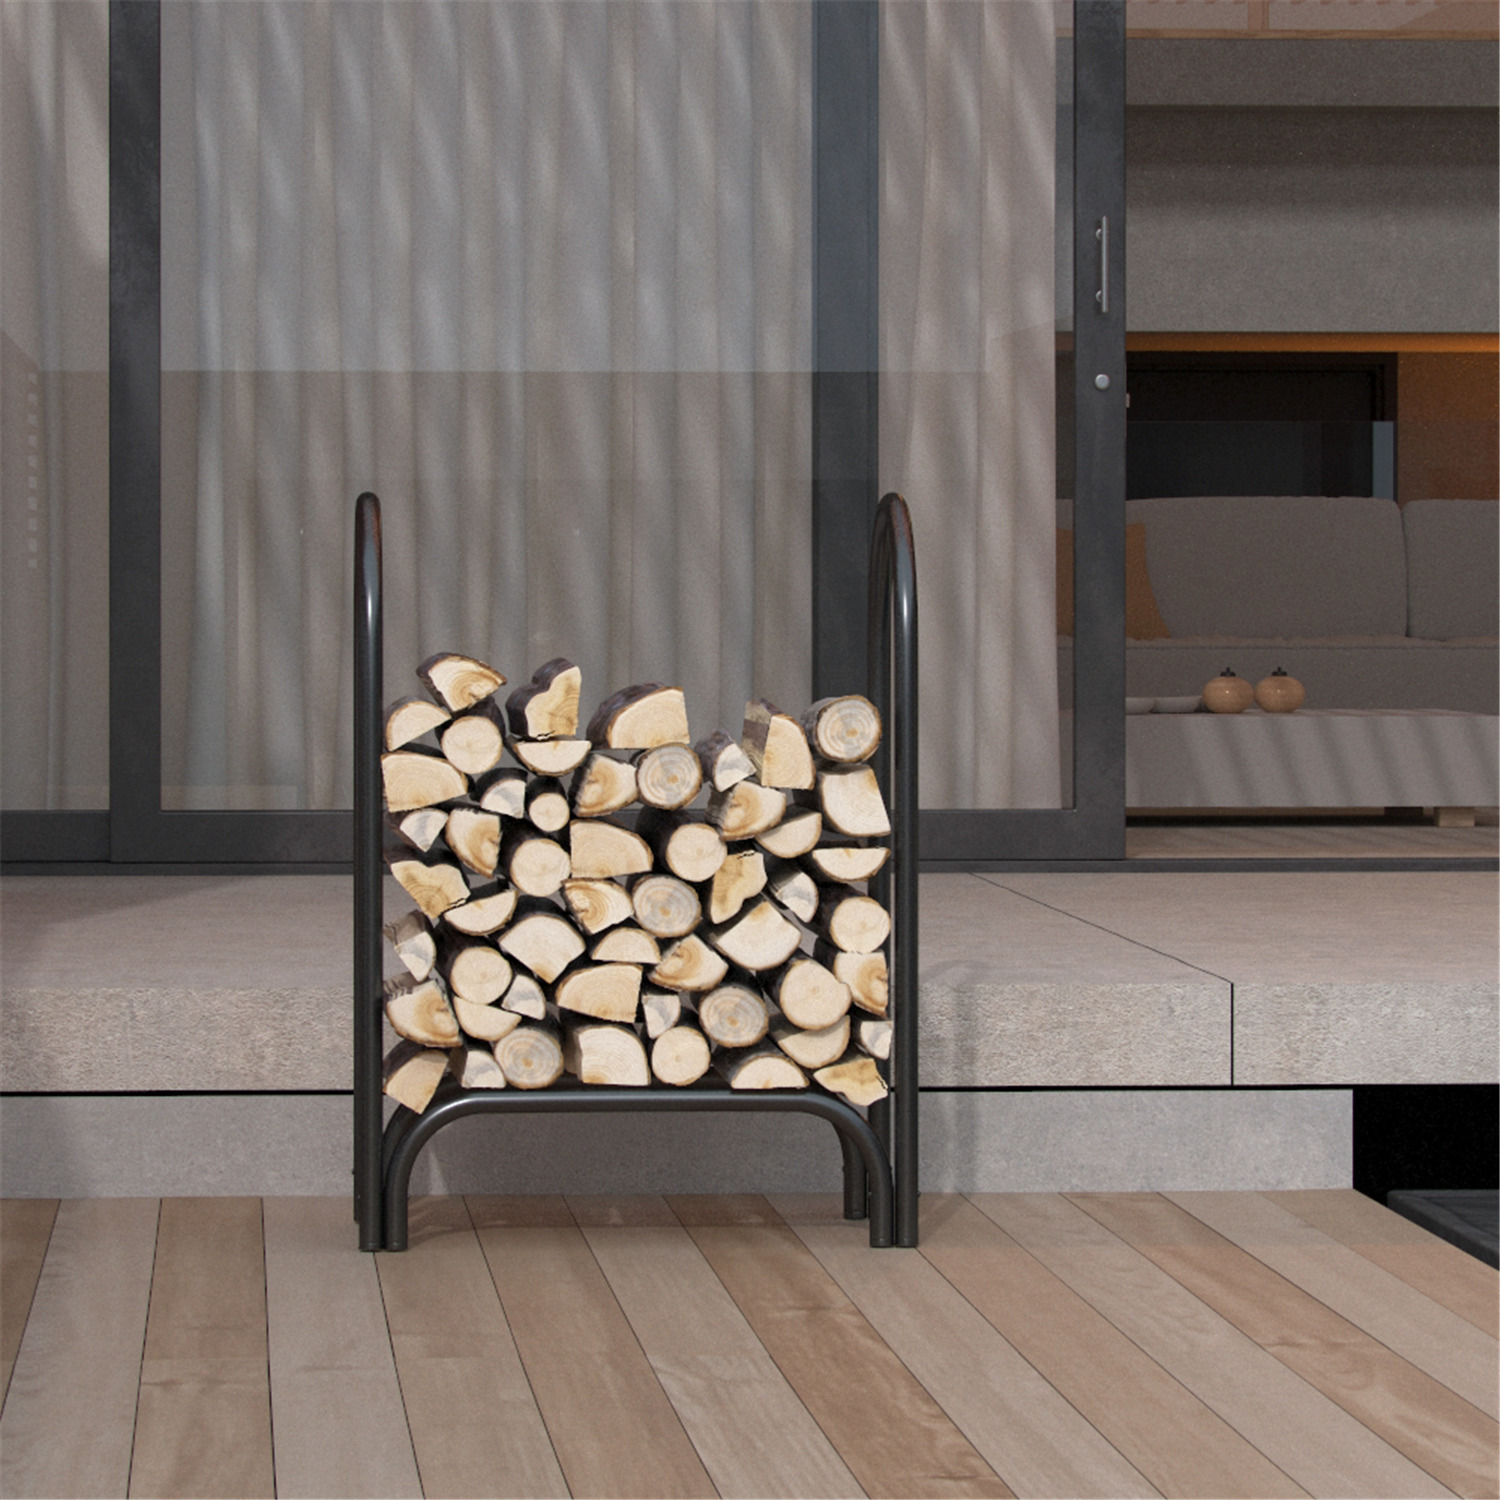 28 Inch Indoor Outdoor Firewood Shelter Log Rack - image 5 of 5